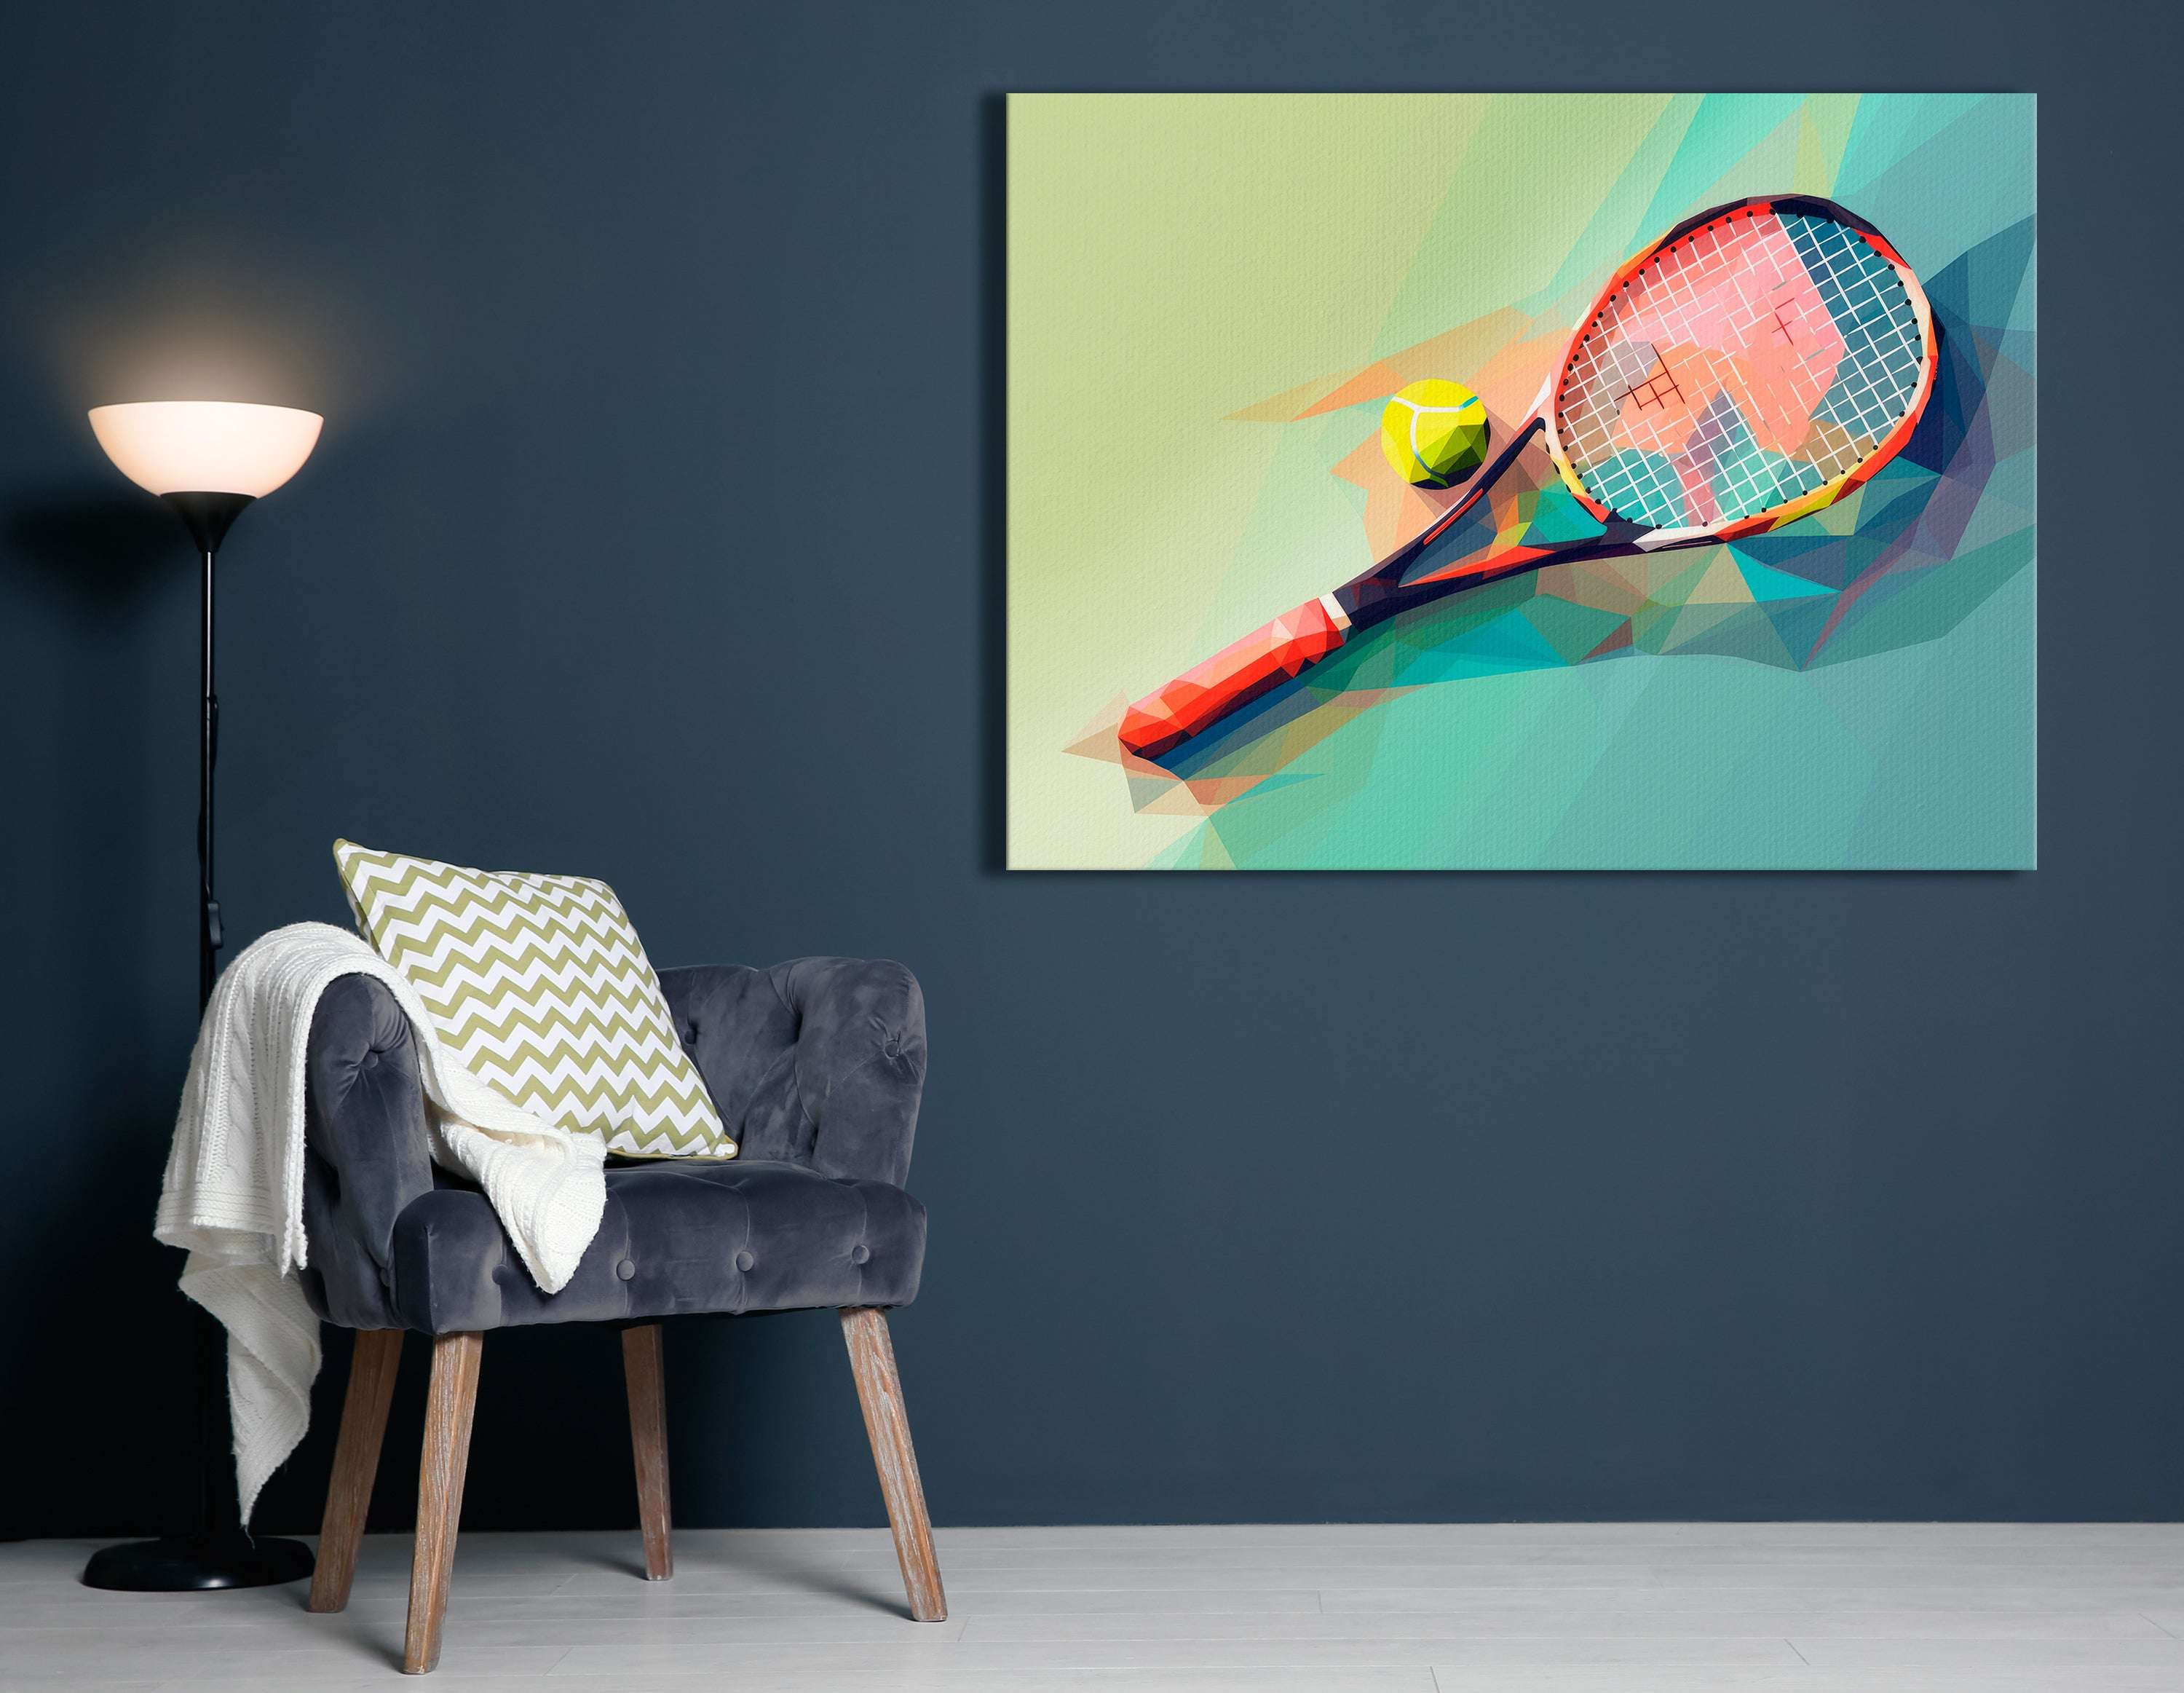 Low Poly Tennis Racket - Canvas Print - Artoholica Ready to Hang Canvas Print